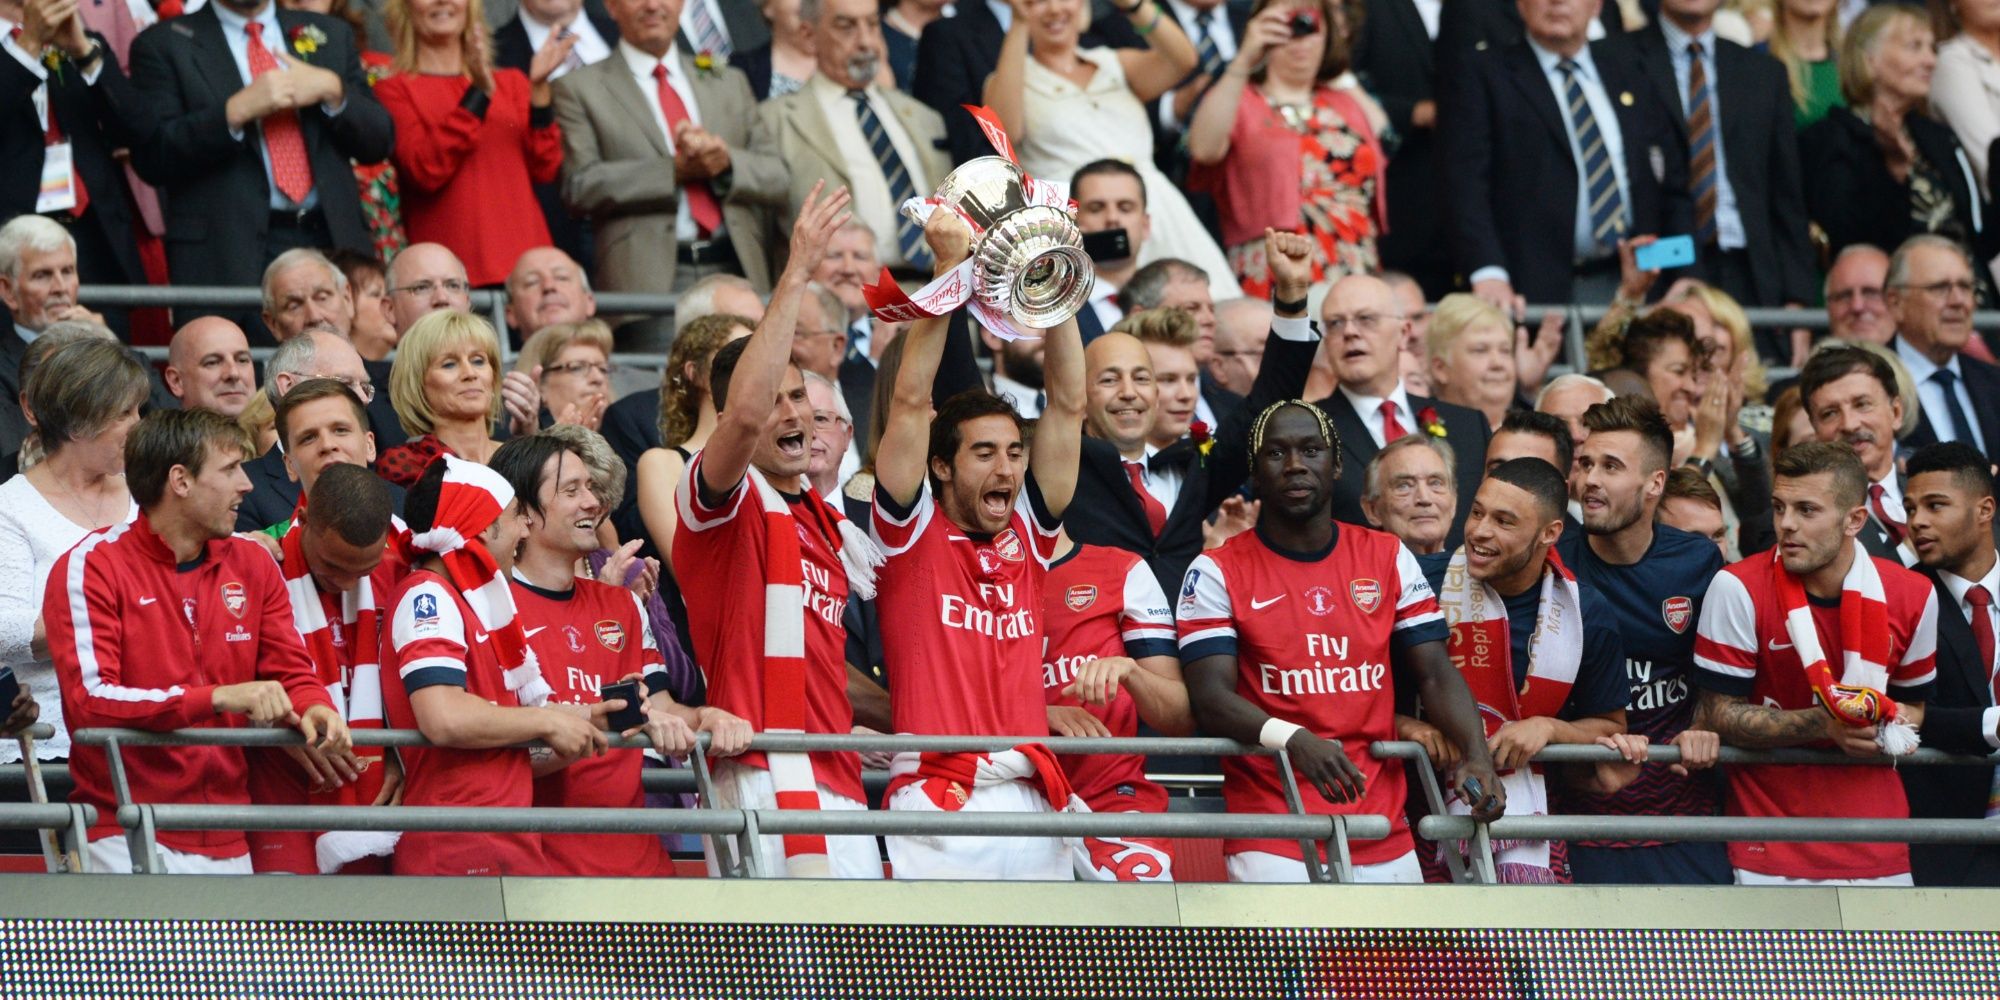 Arsenal won the 2014 FA Cup.